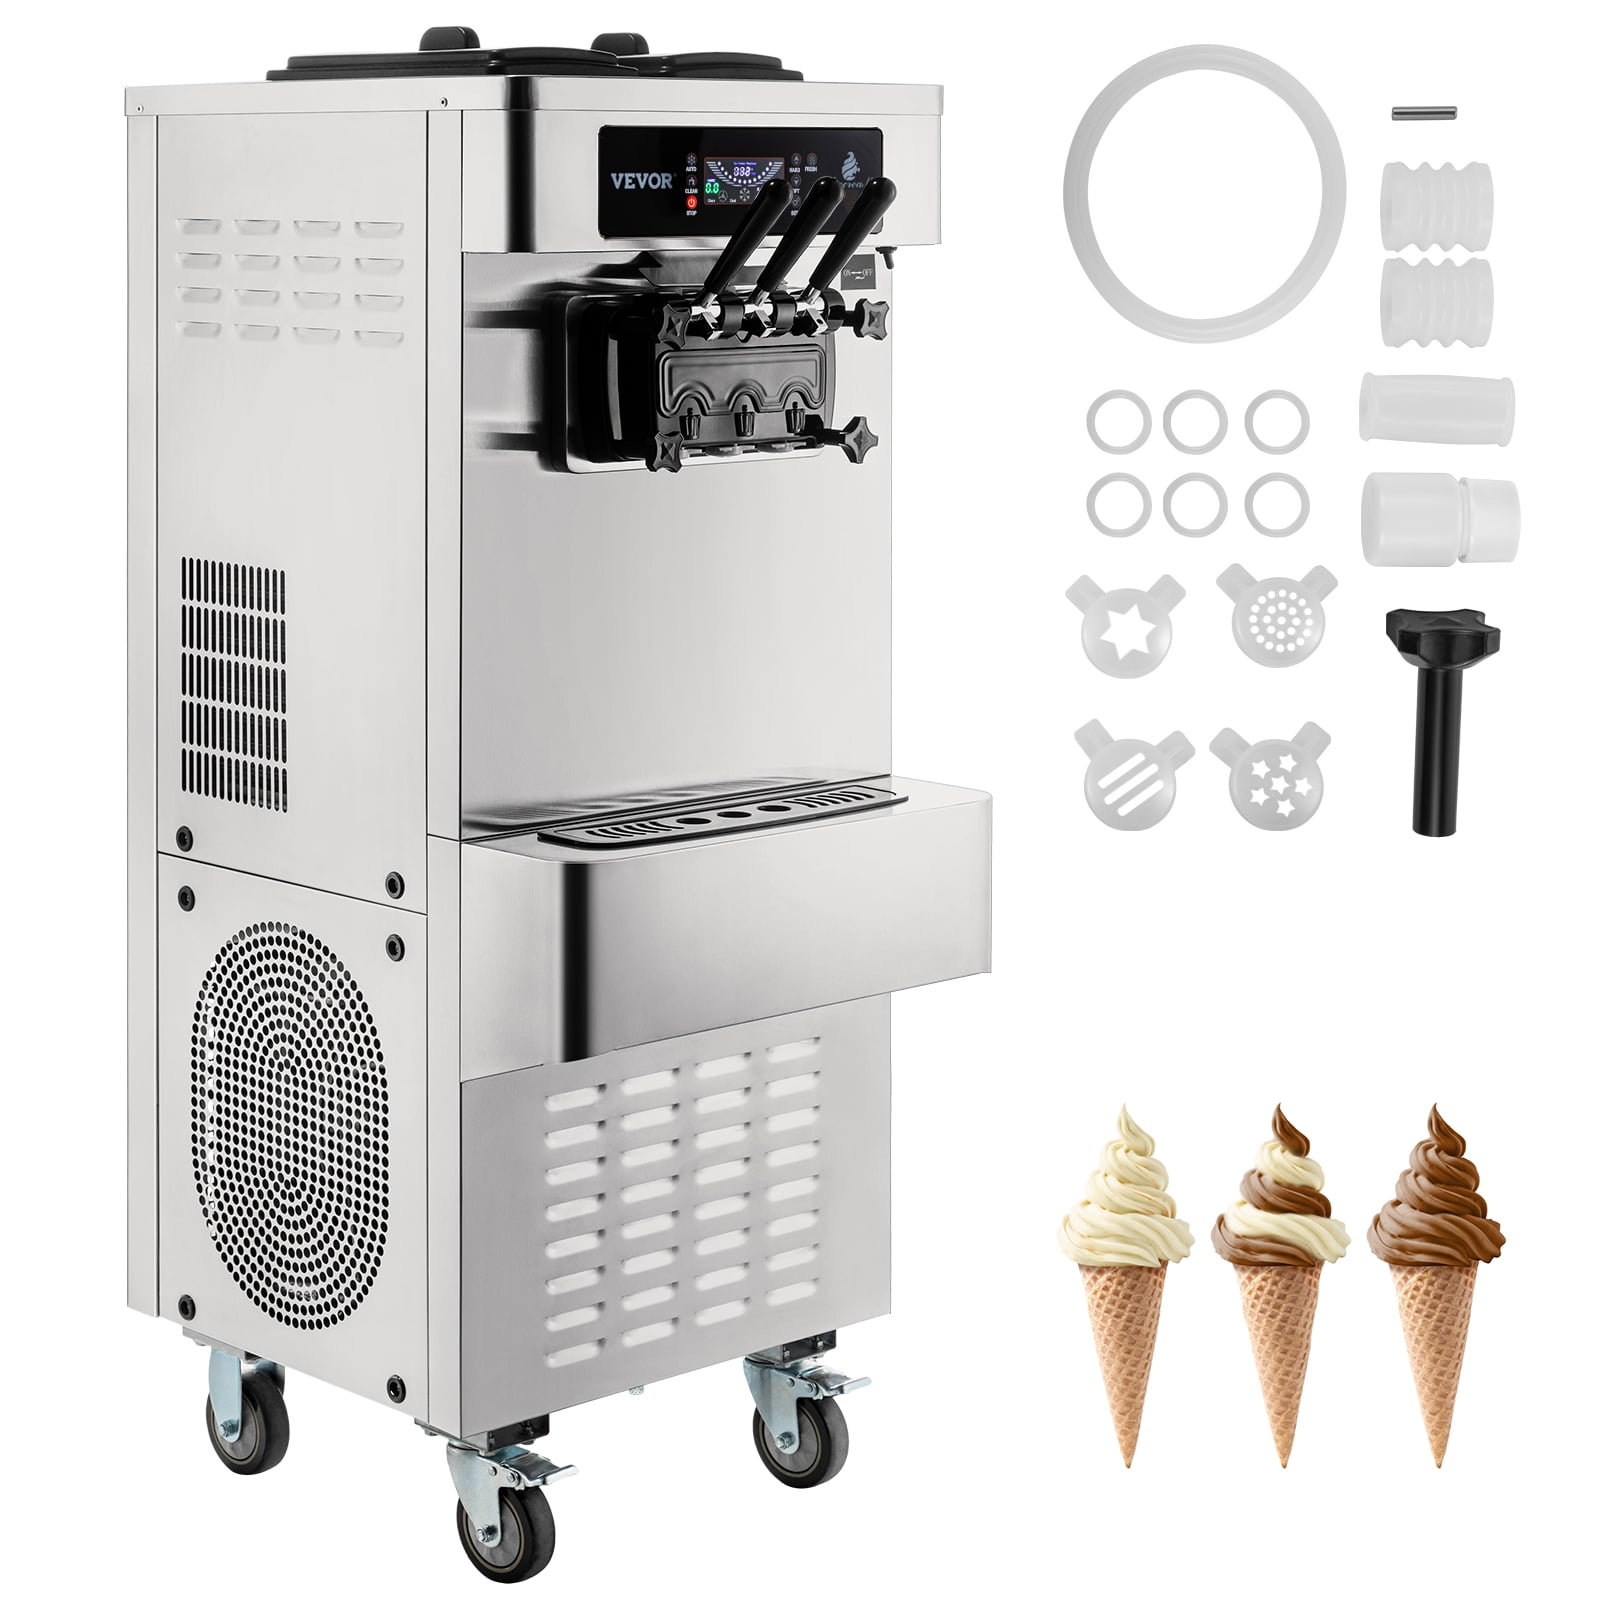 1x ice cream maker handle accessories ice cream maker handle handle